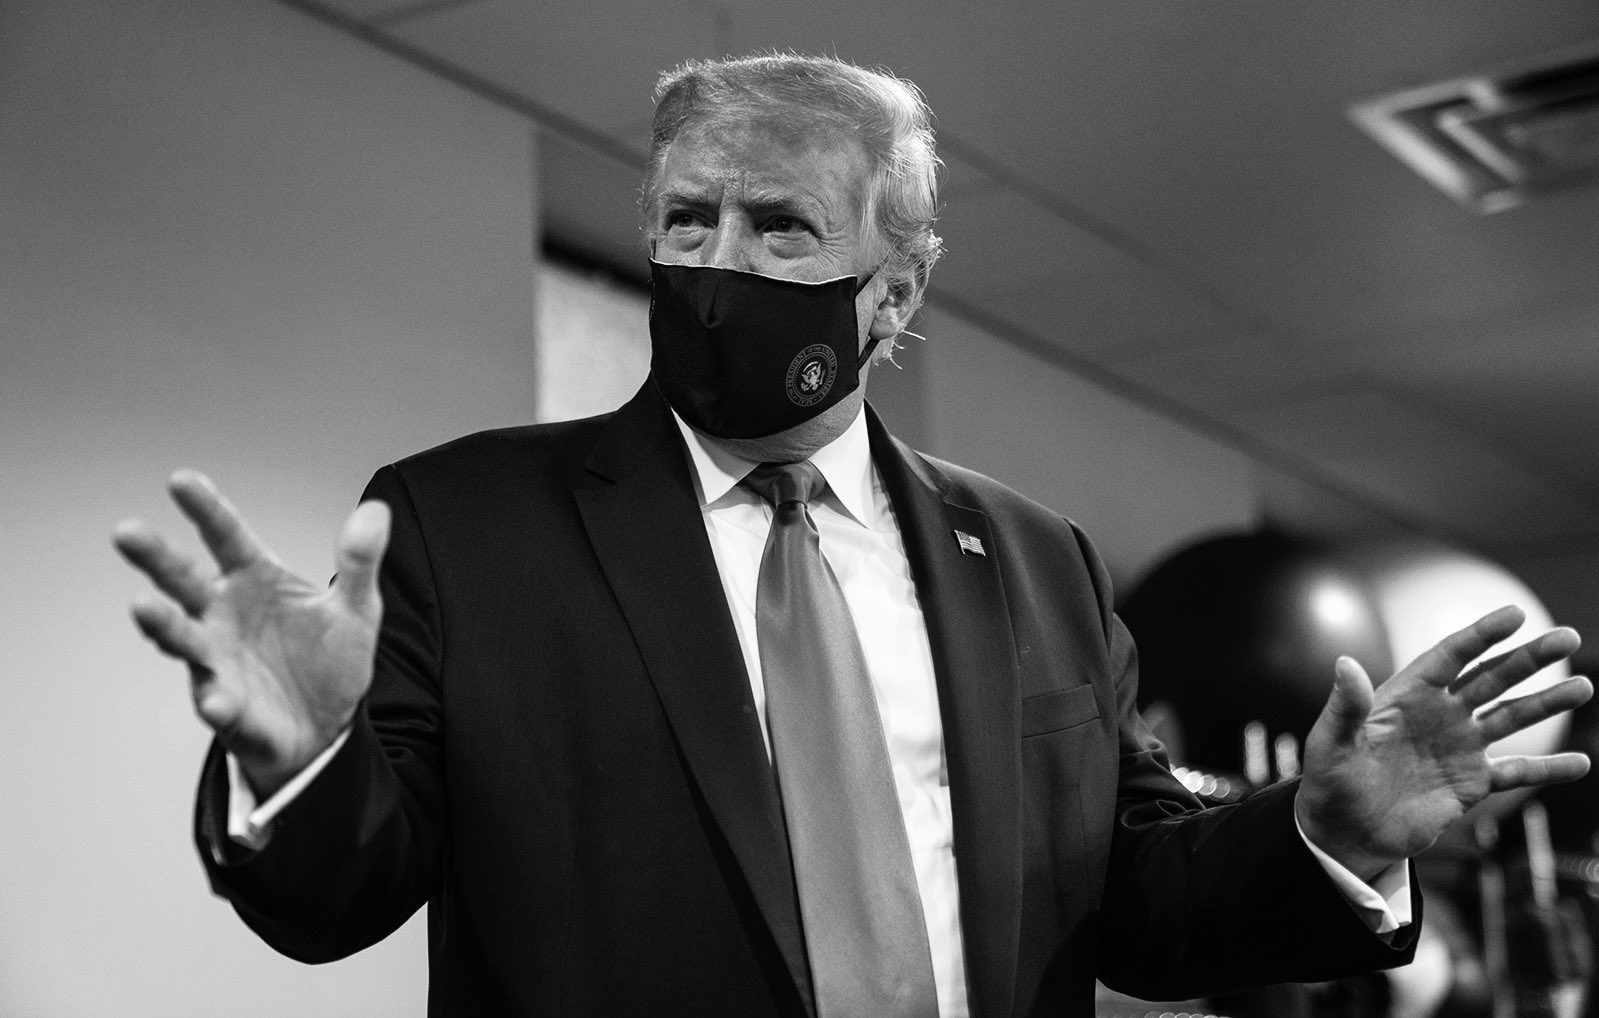 Donald Trump publicó una foto usando cubrebocas (@realDonaldTrump)